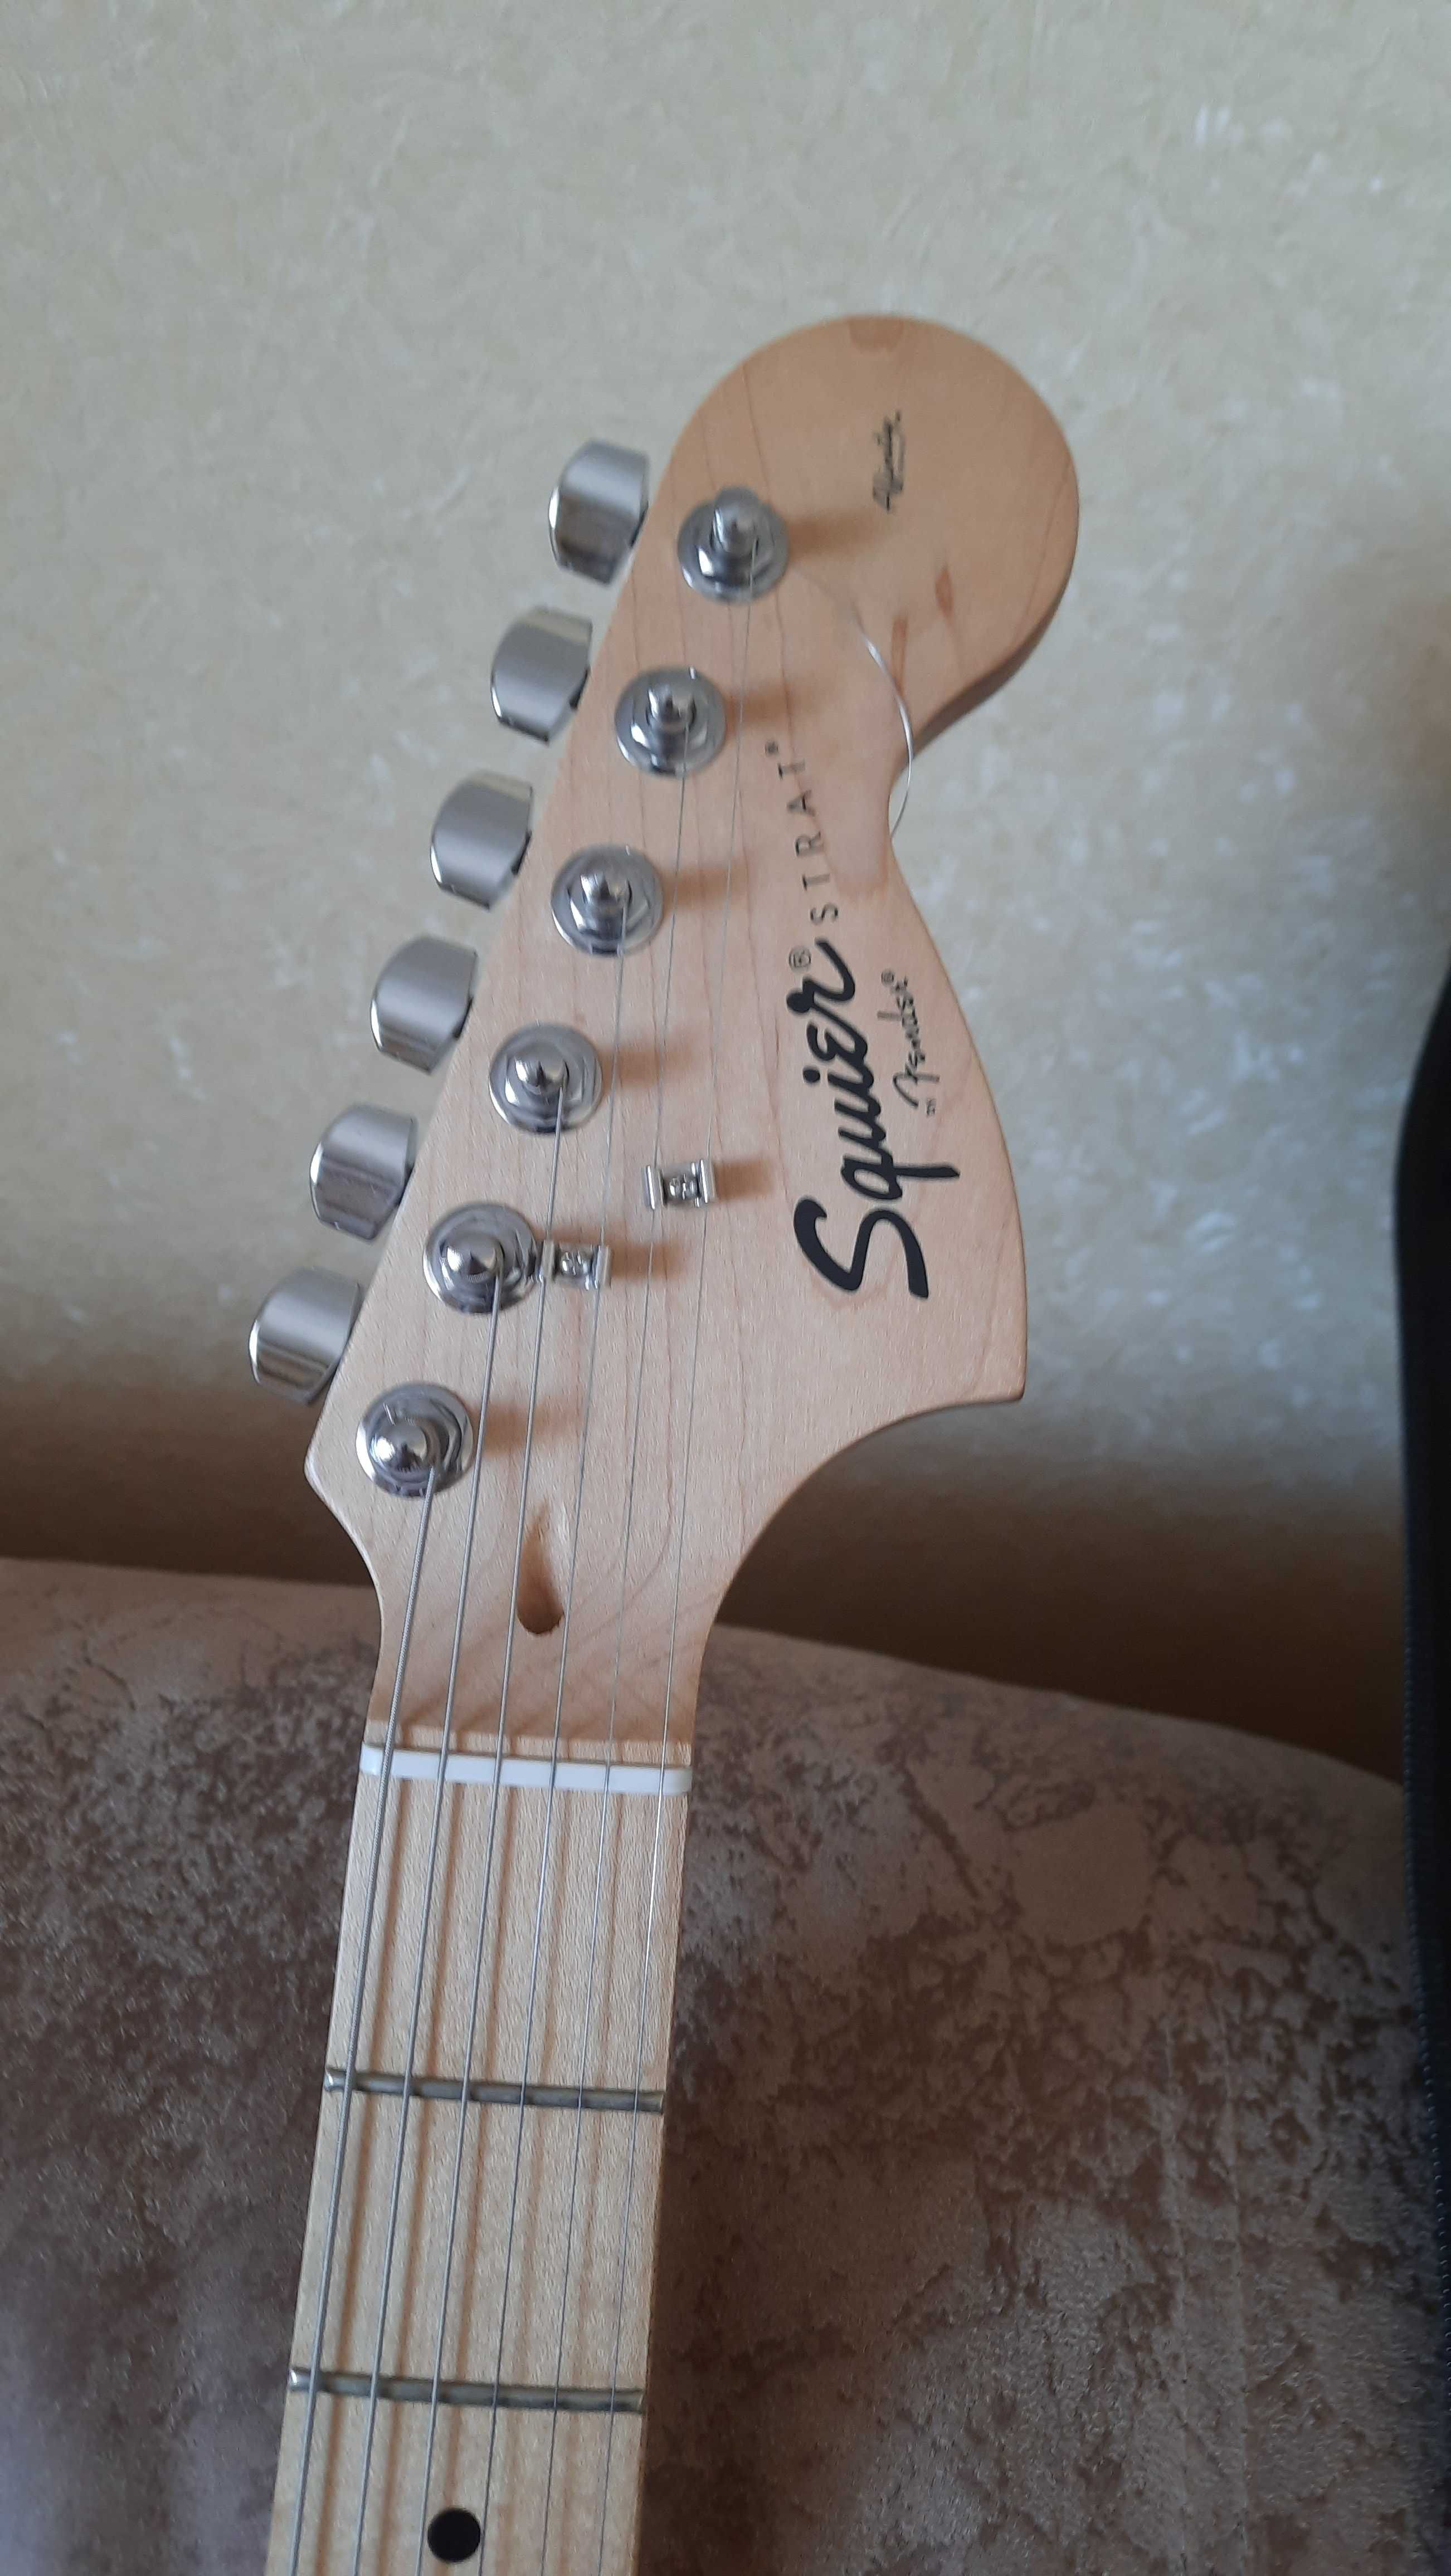 FENDER Squier Stratocaster Серія Affinity Ціна остаточна. Самовивіз